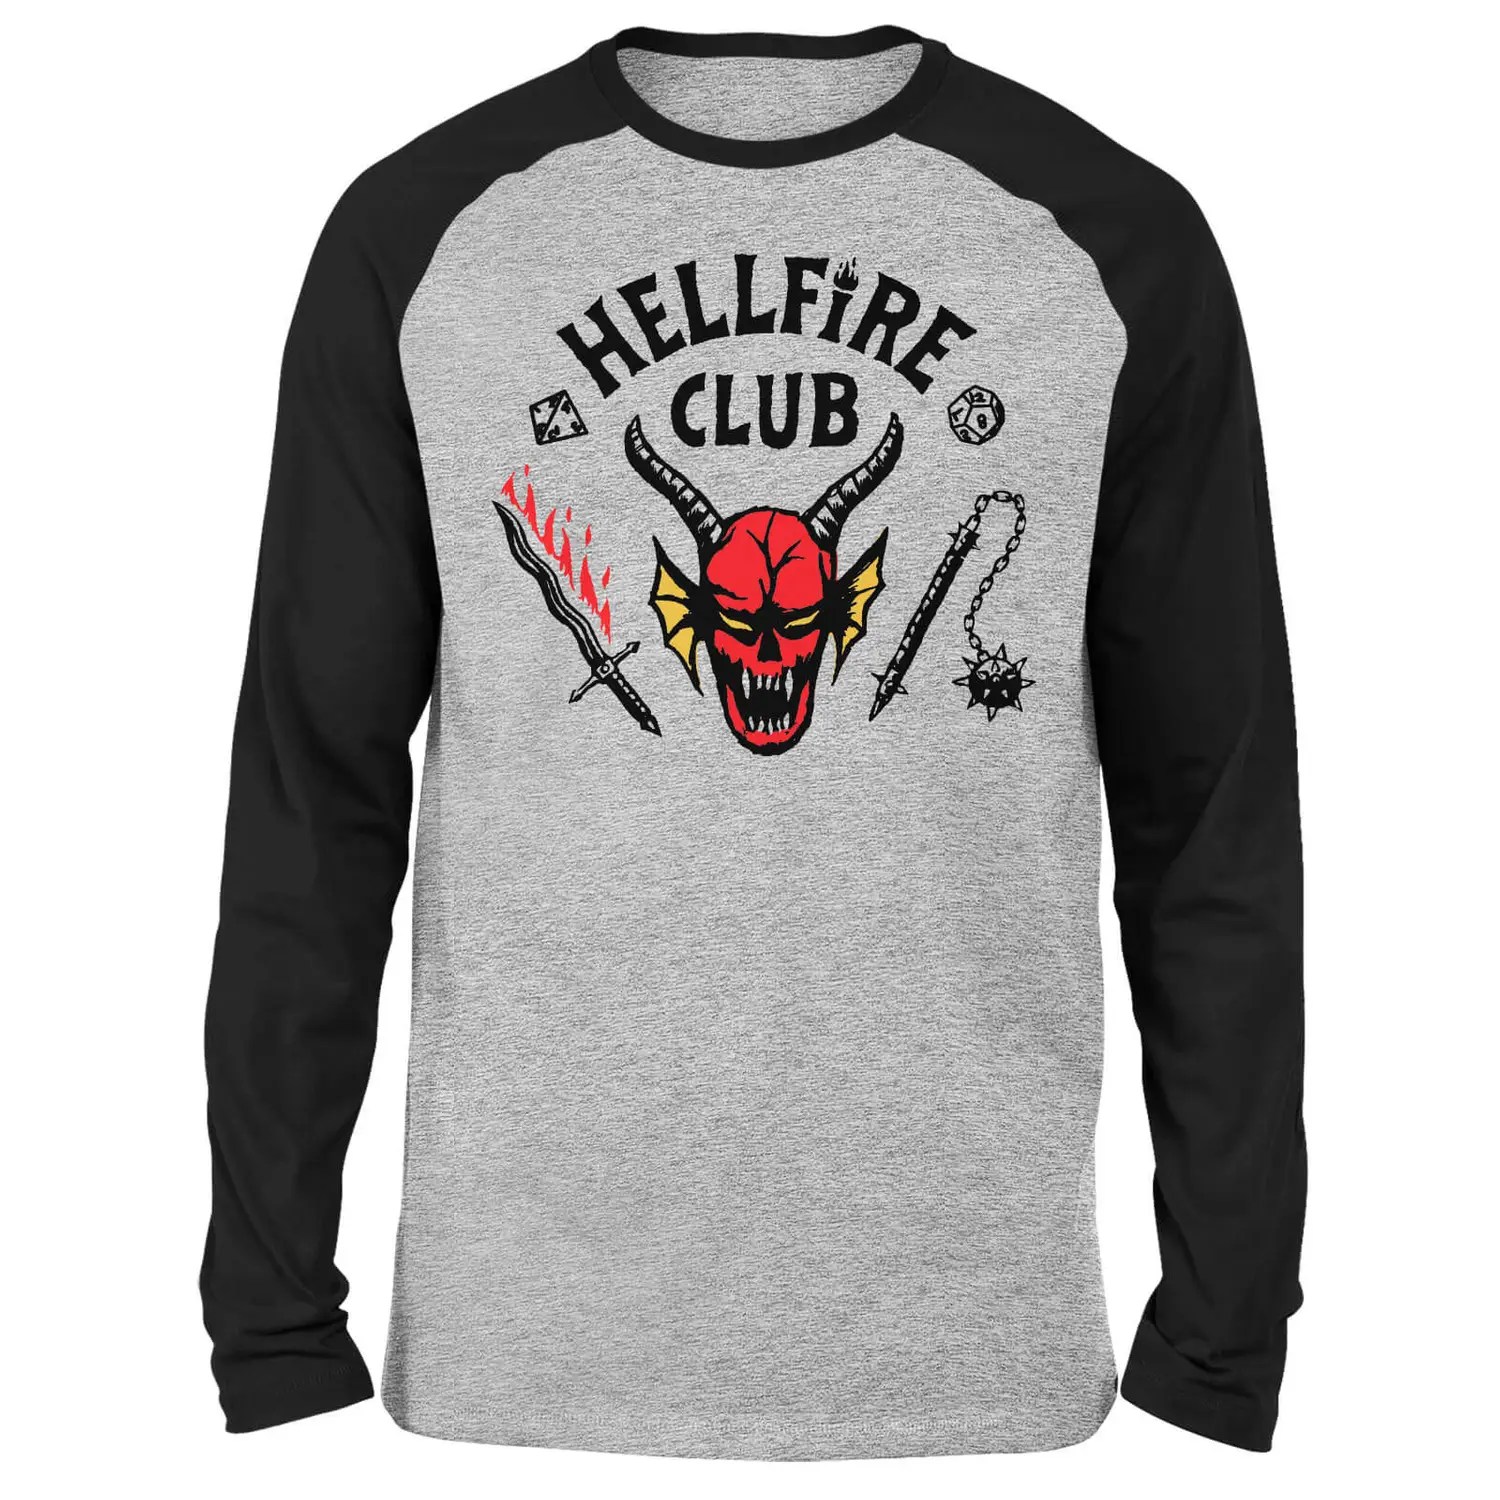 A long sleeved Hellfire Club t-shirt.